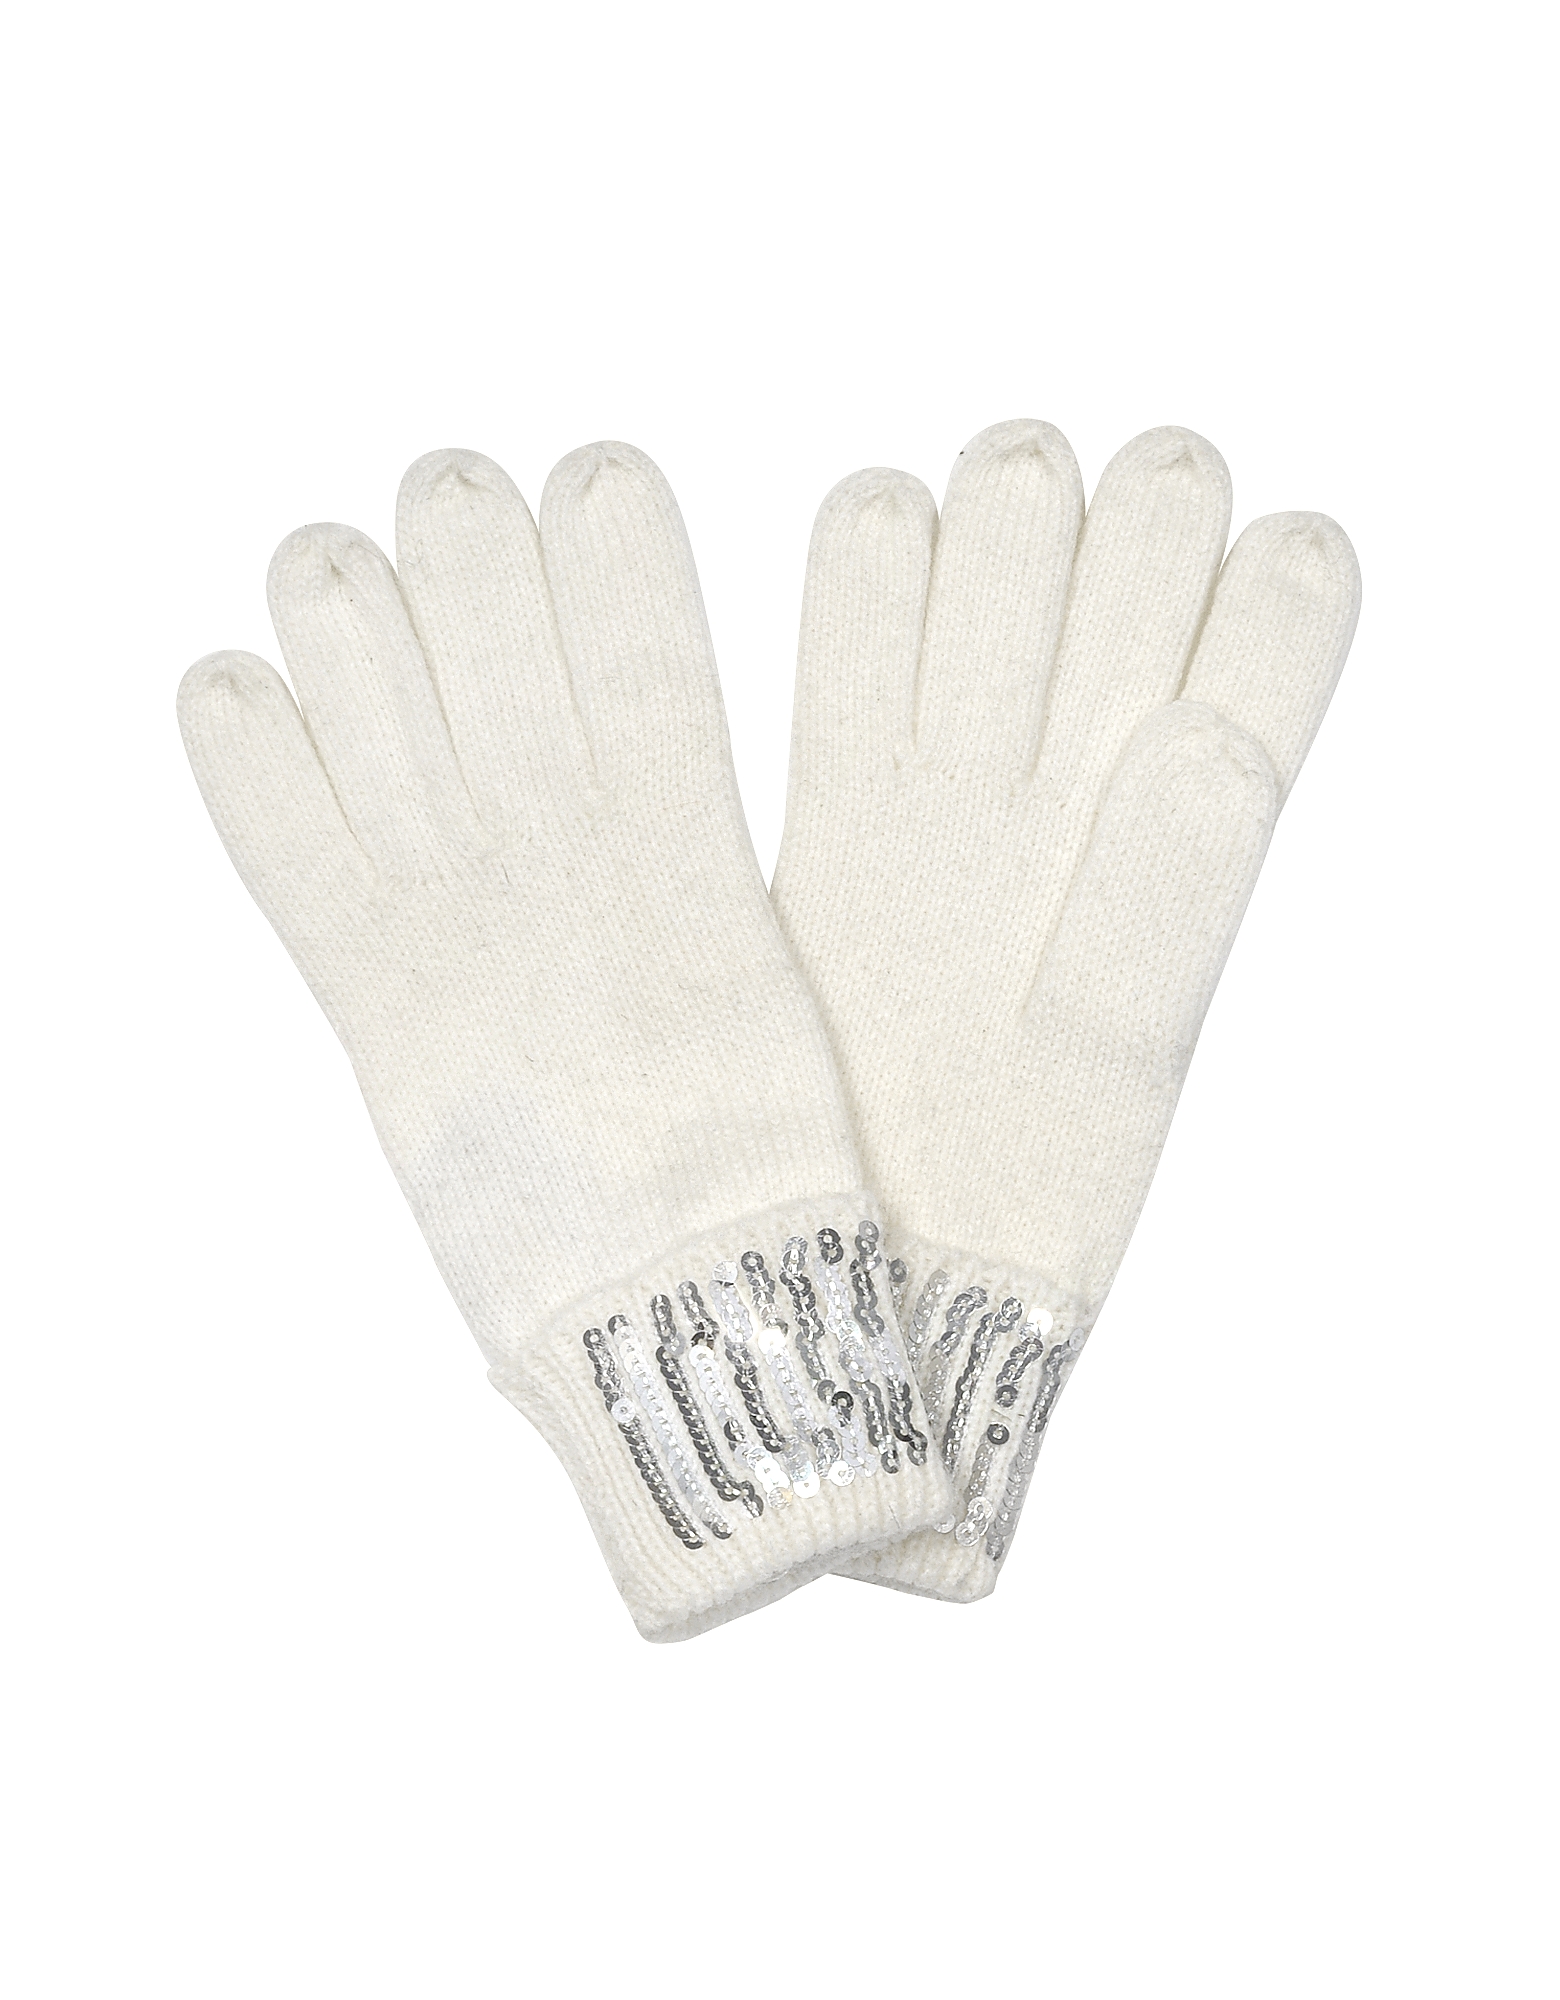 Marina D'Este Women's Gloves White Women's Gloves w/Sequins